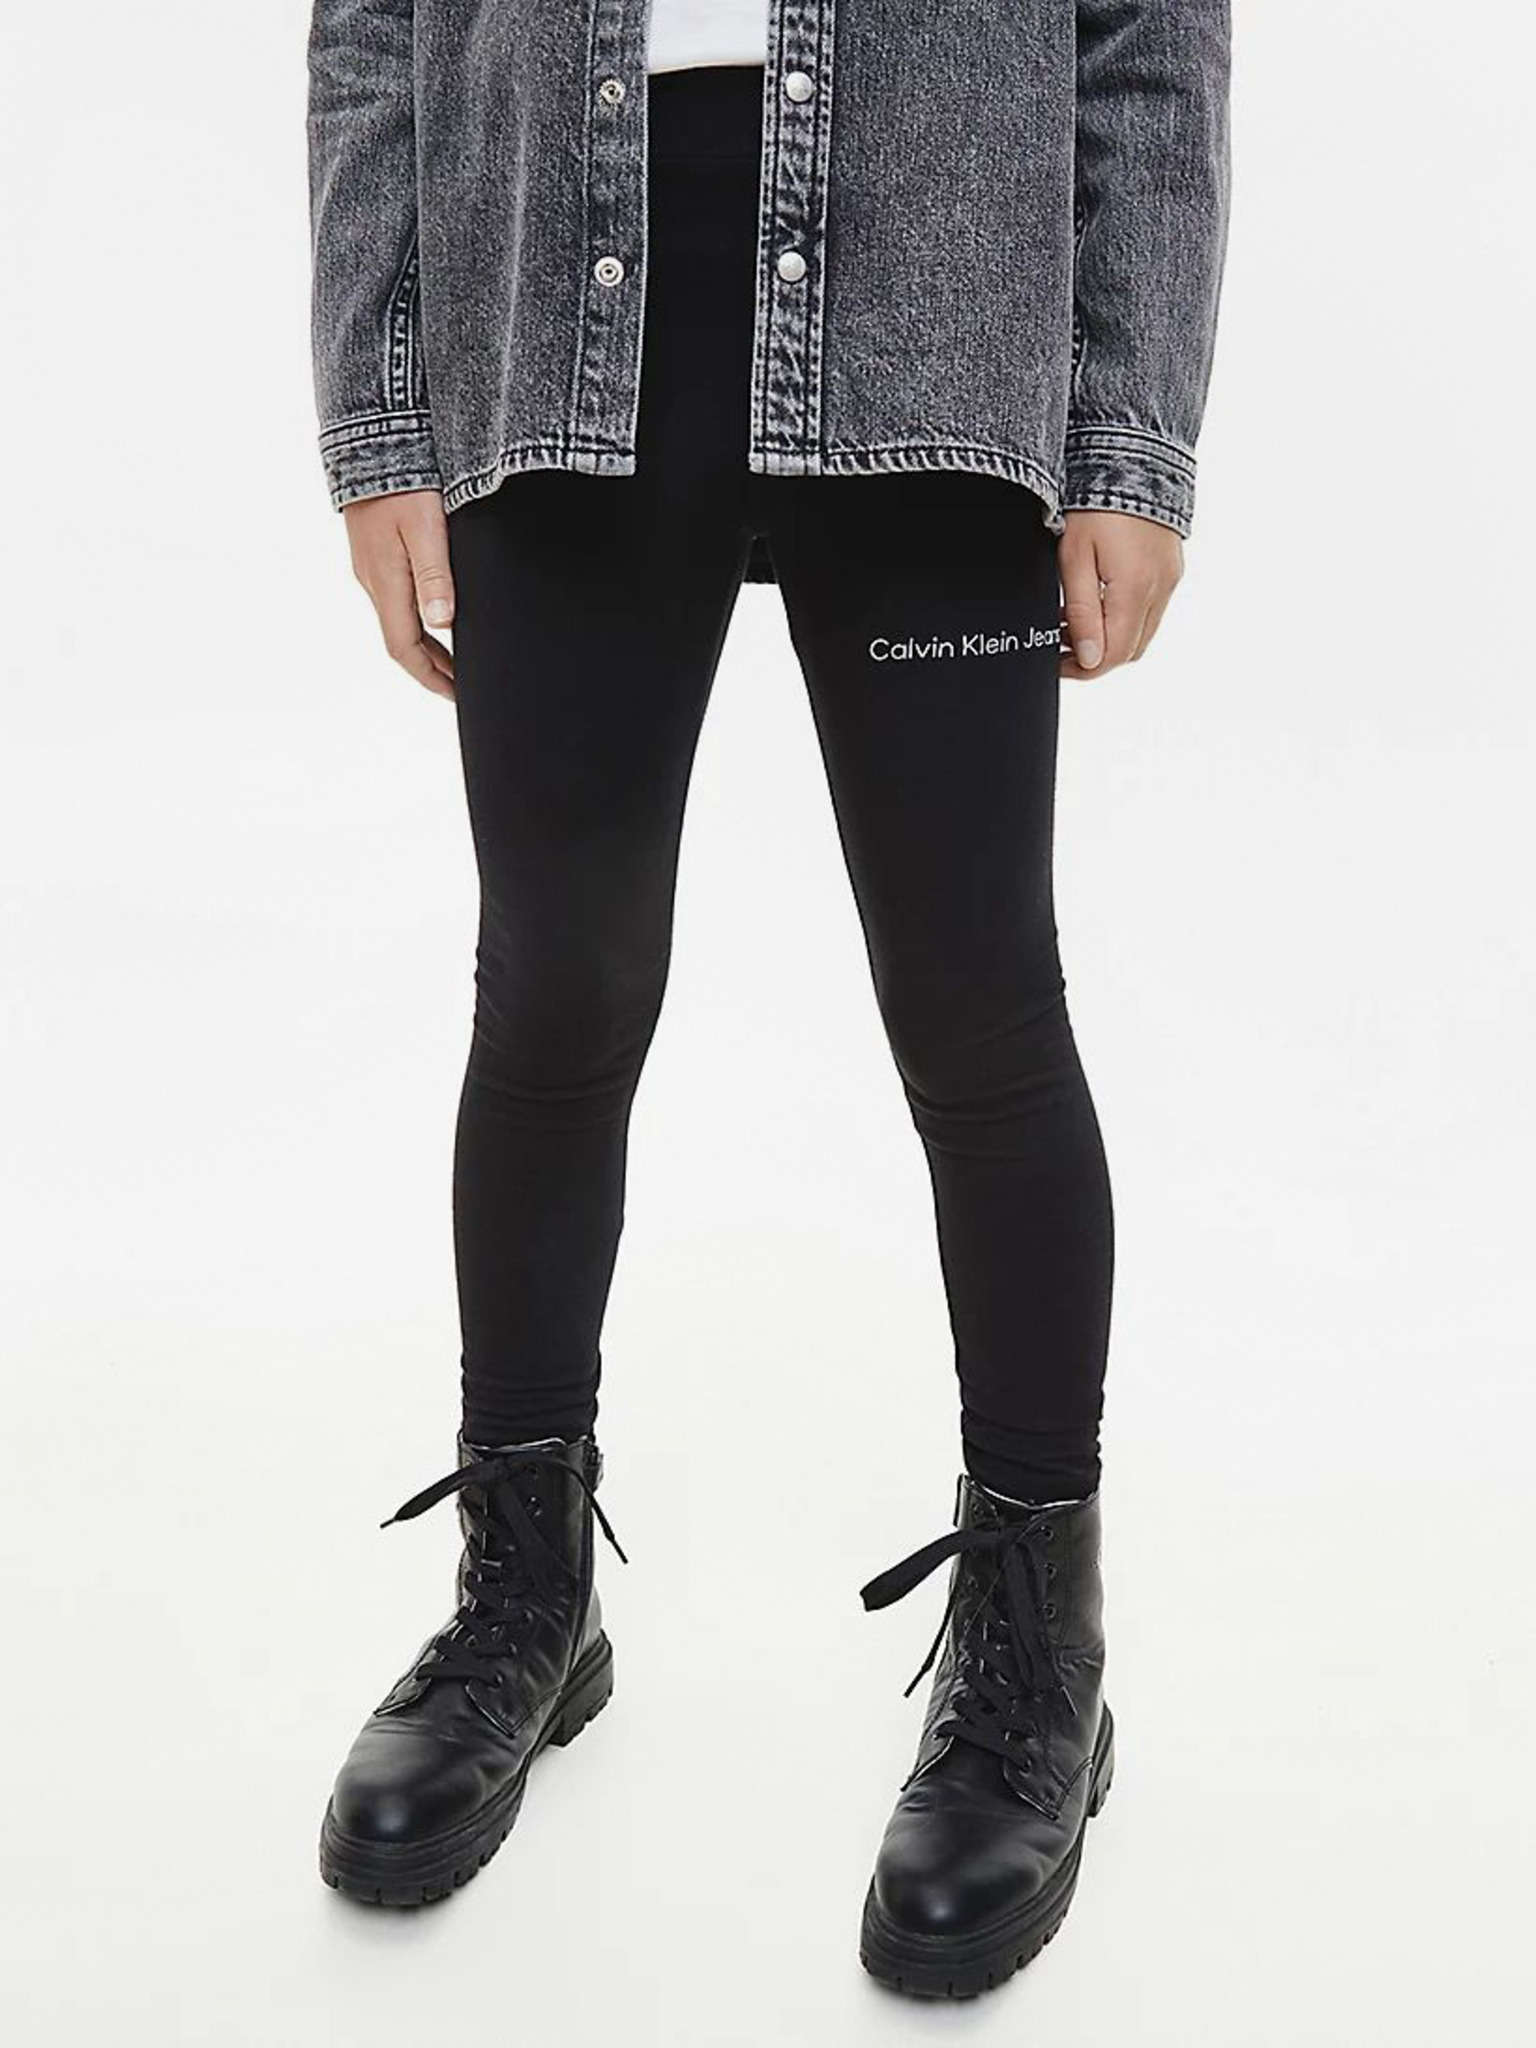 Calvin Klein jeans power stretch LEGGING jeans W29 | Stretch leggings, Jean  leggings, Legging